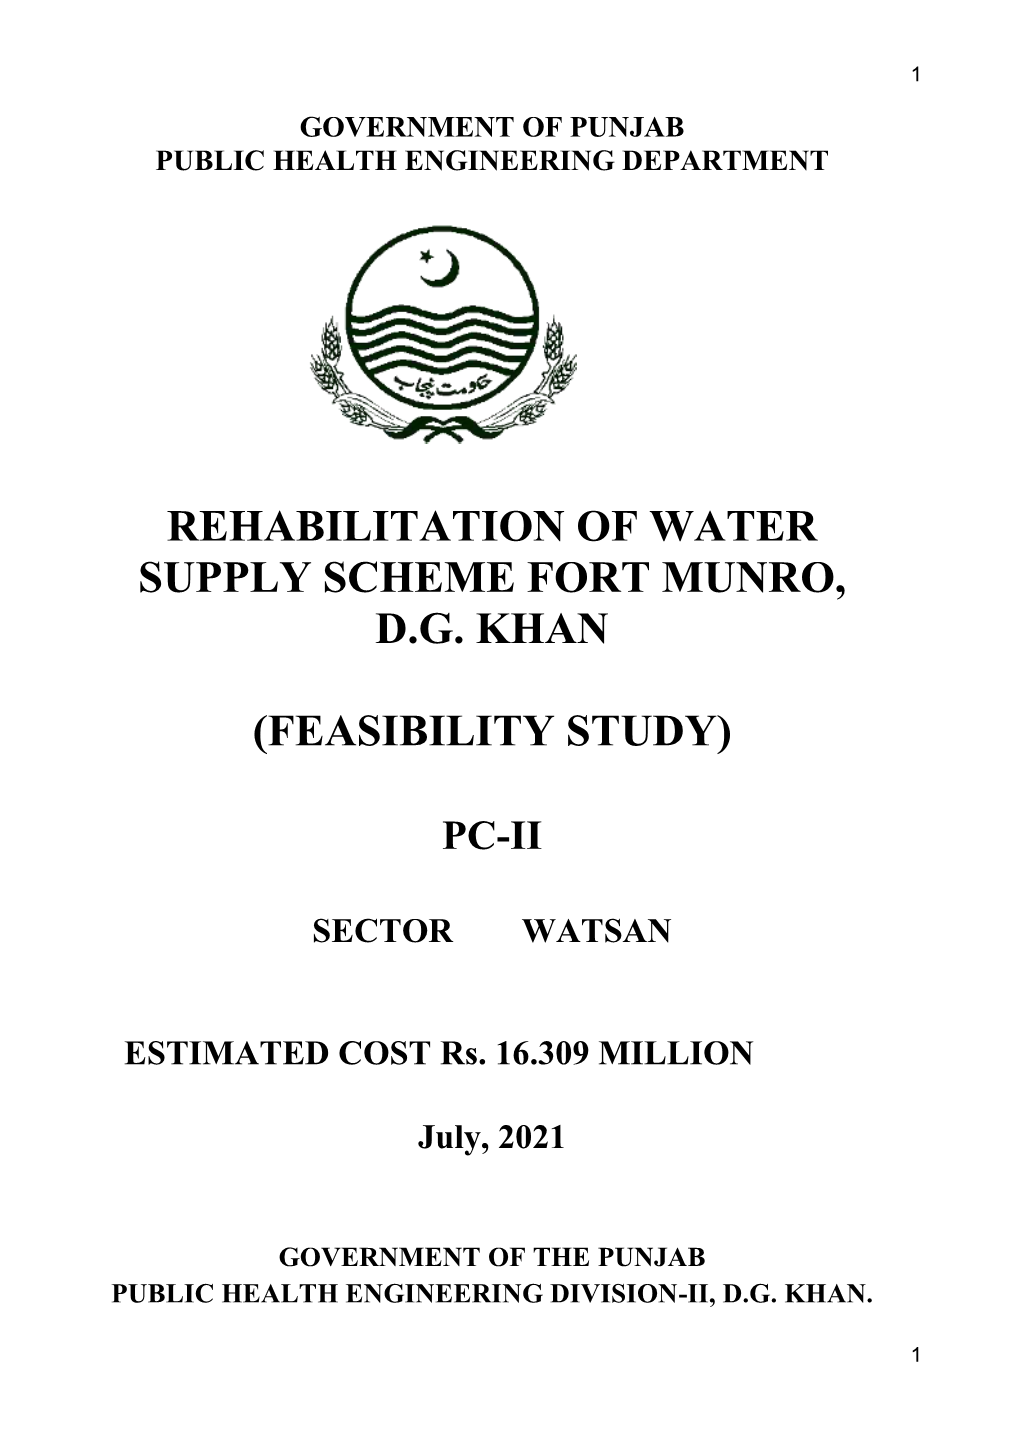 Rehabilitation of Water Supply Scheme Fort Munro, Dg Khan (Feasibility Study)